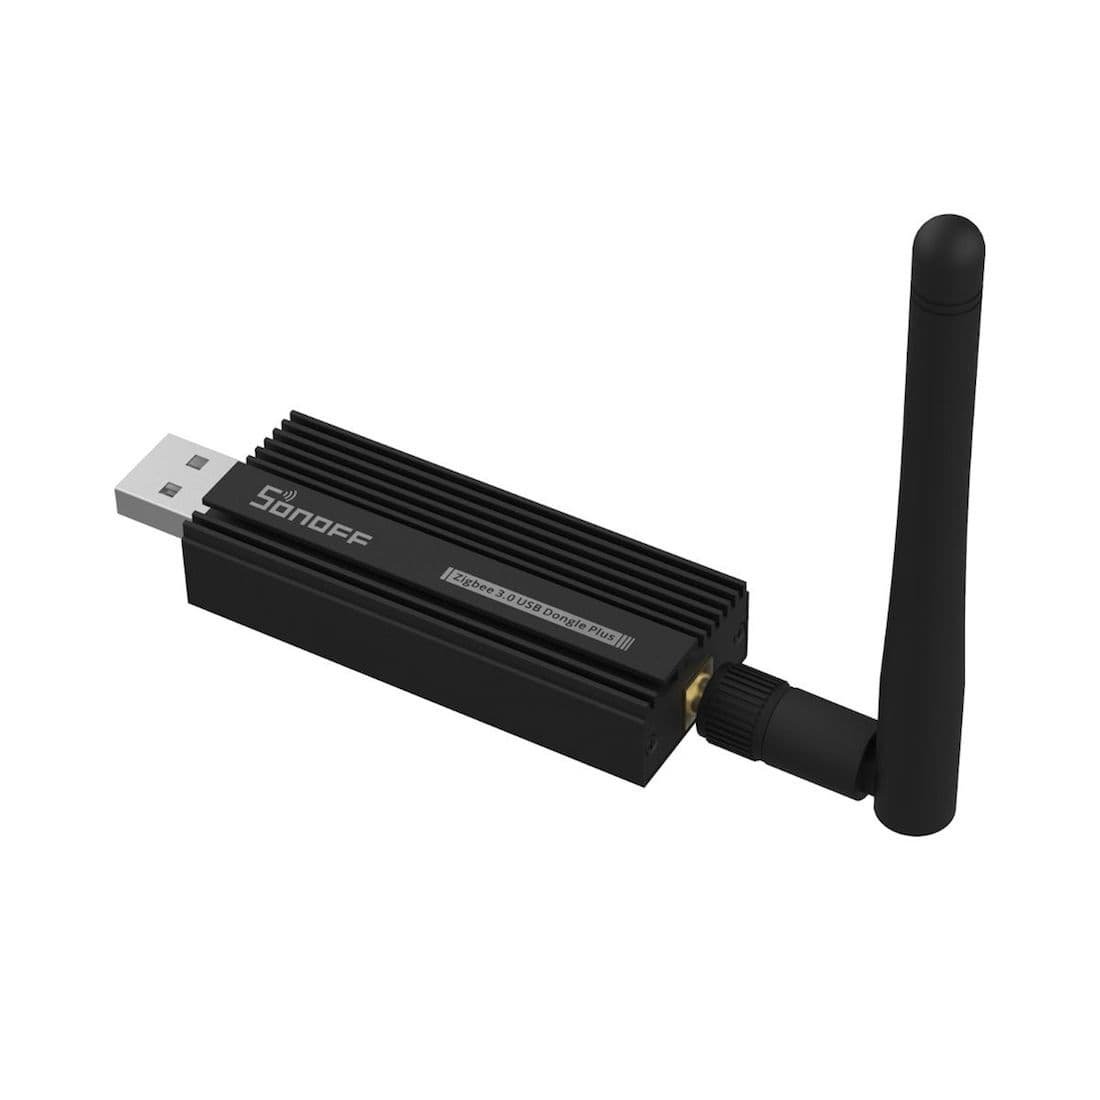  SONOFF Zigbee 3.0 USB Dongle Plus-E Gateway, Universal